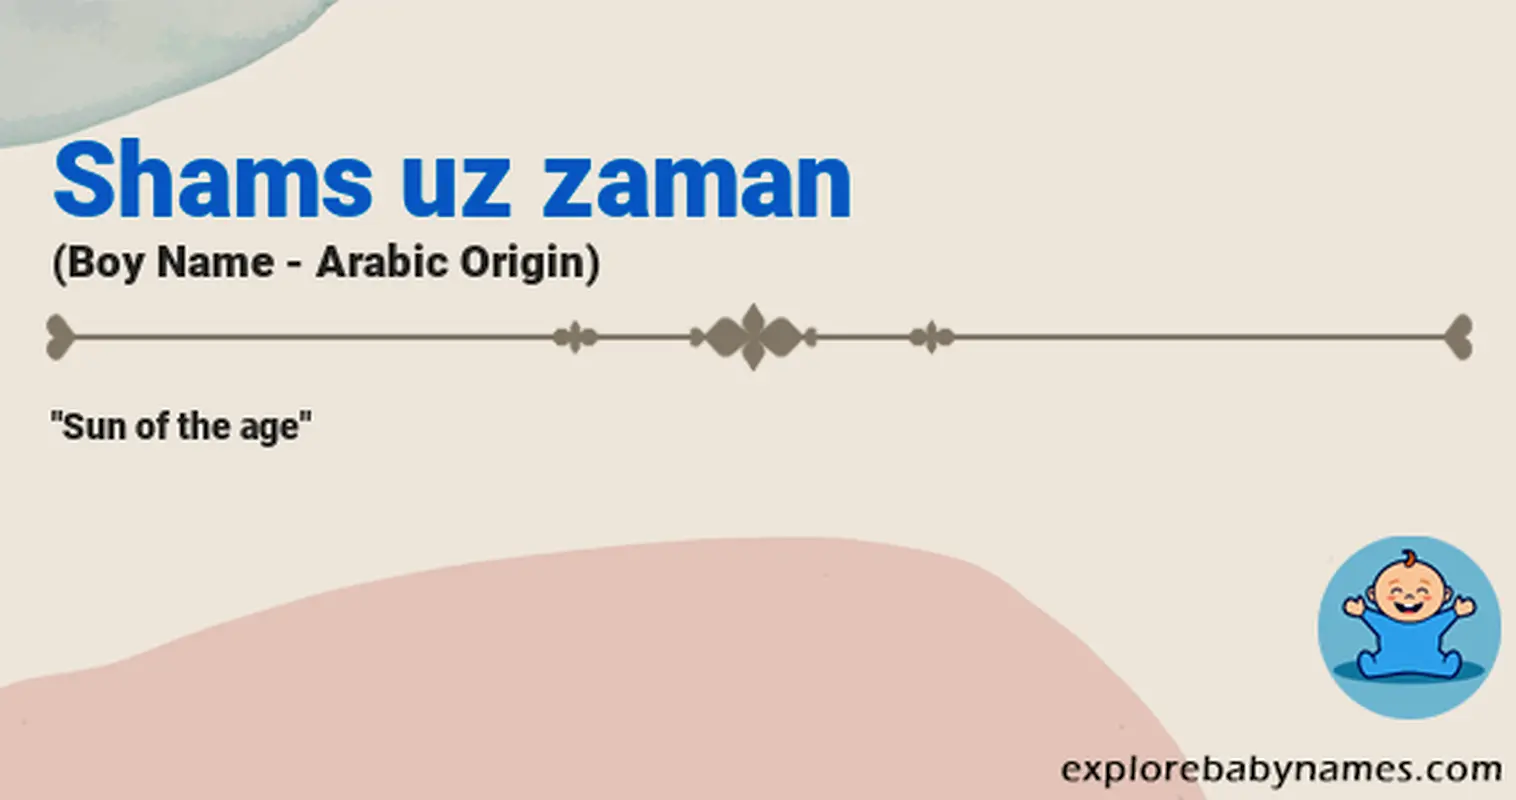 Meaning of Shams uz zaman